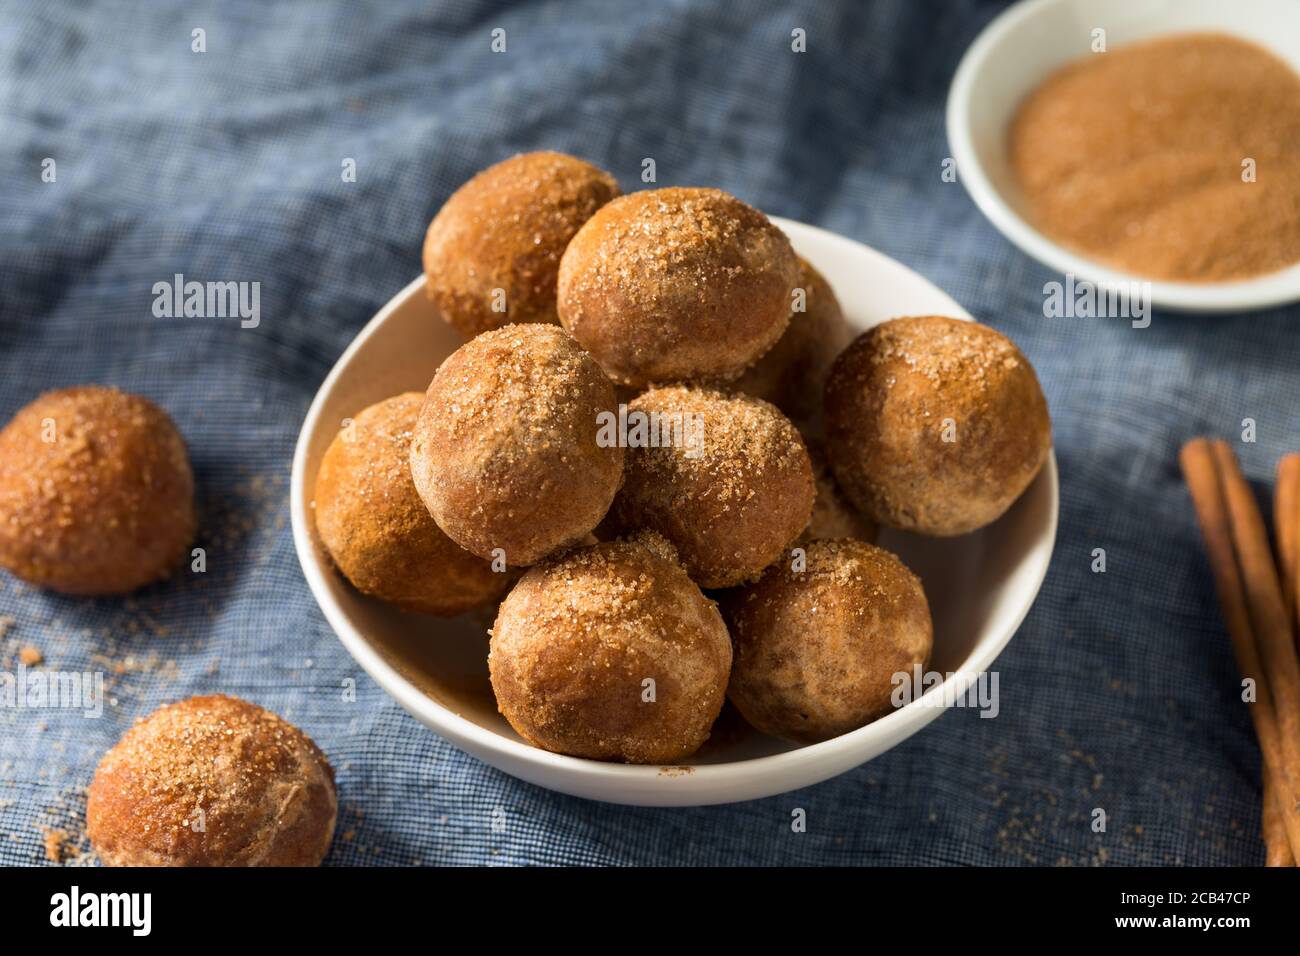 Homemade Fried Cinnamon Sugar Donut Holes Ready to Eat Stock Photo